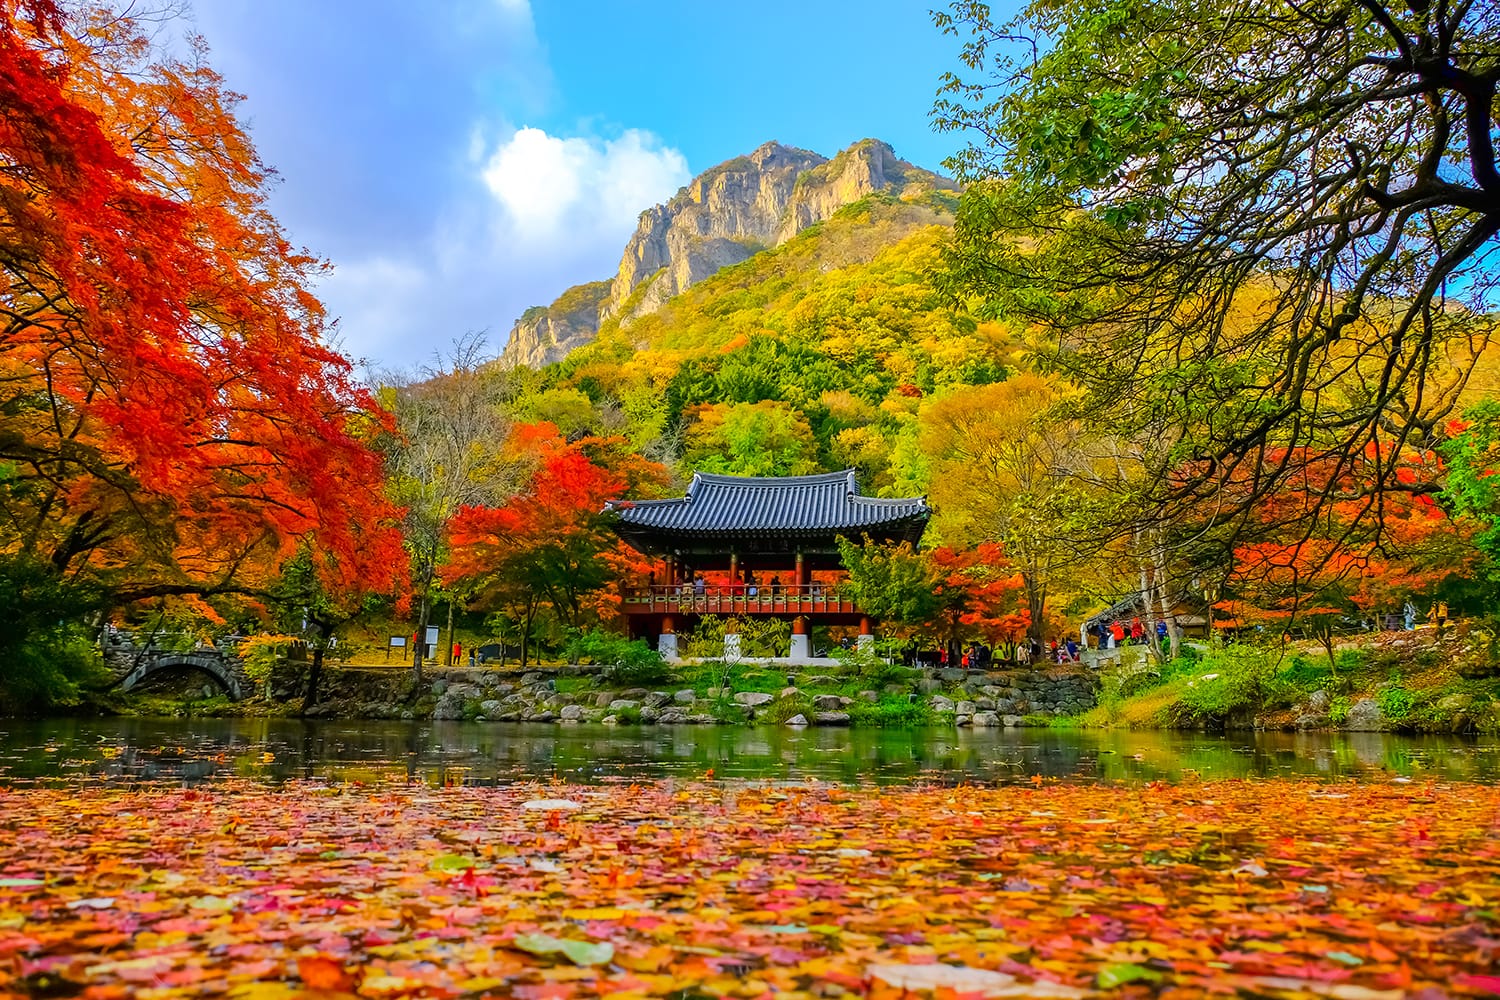 Colorful autumn at Baekyangsa temple in Naejangsan national park, South Korea.